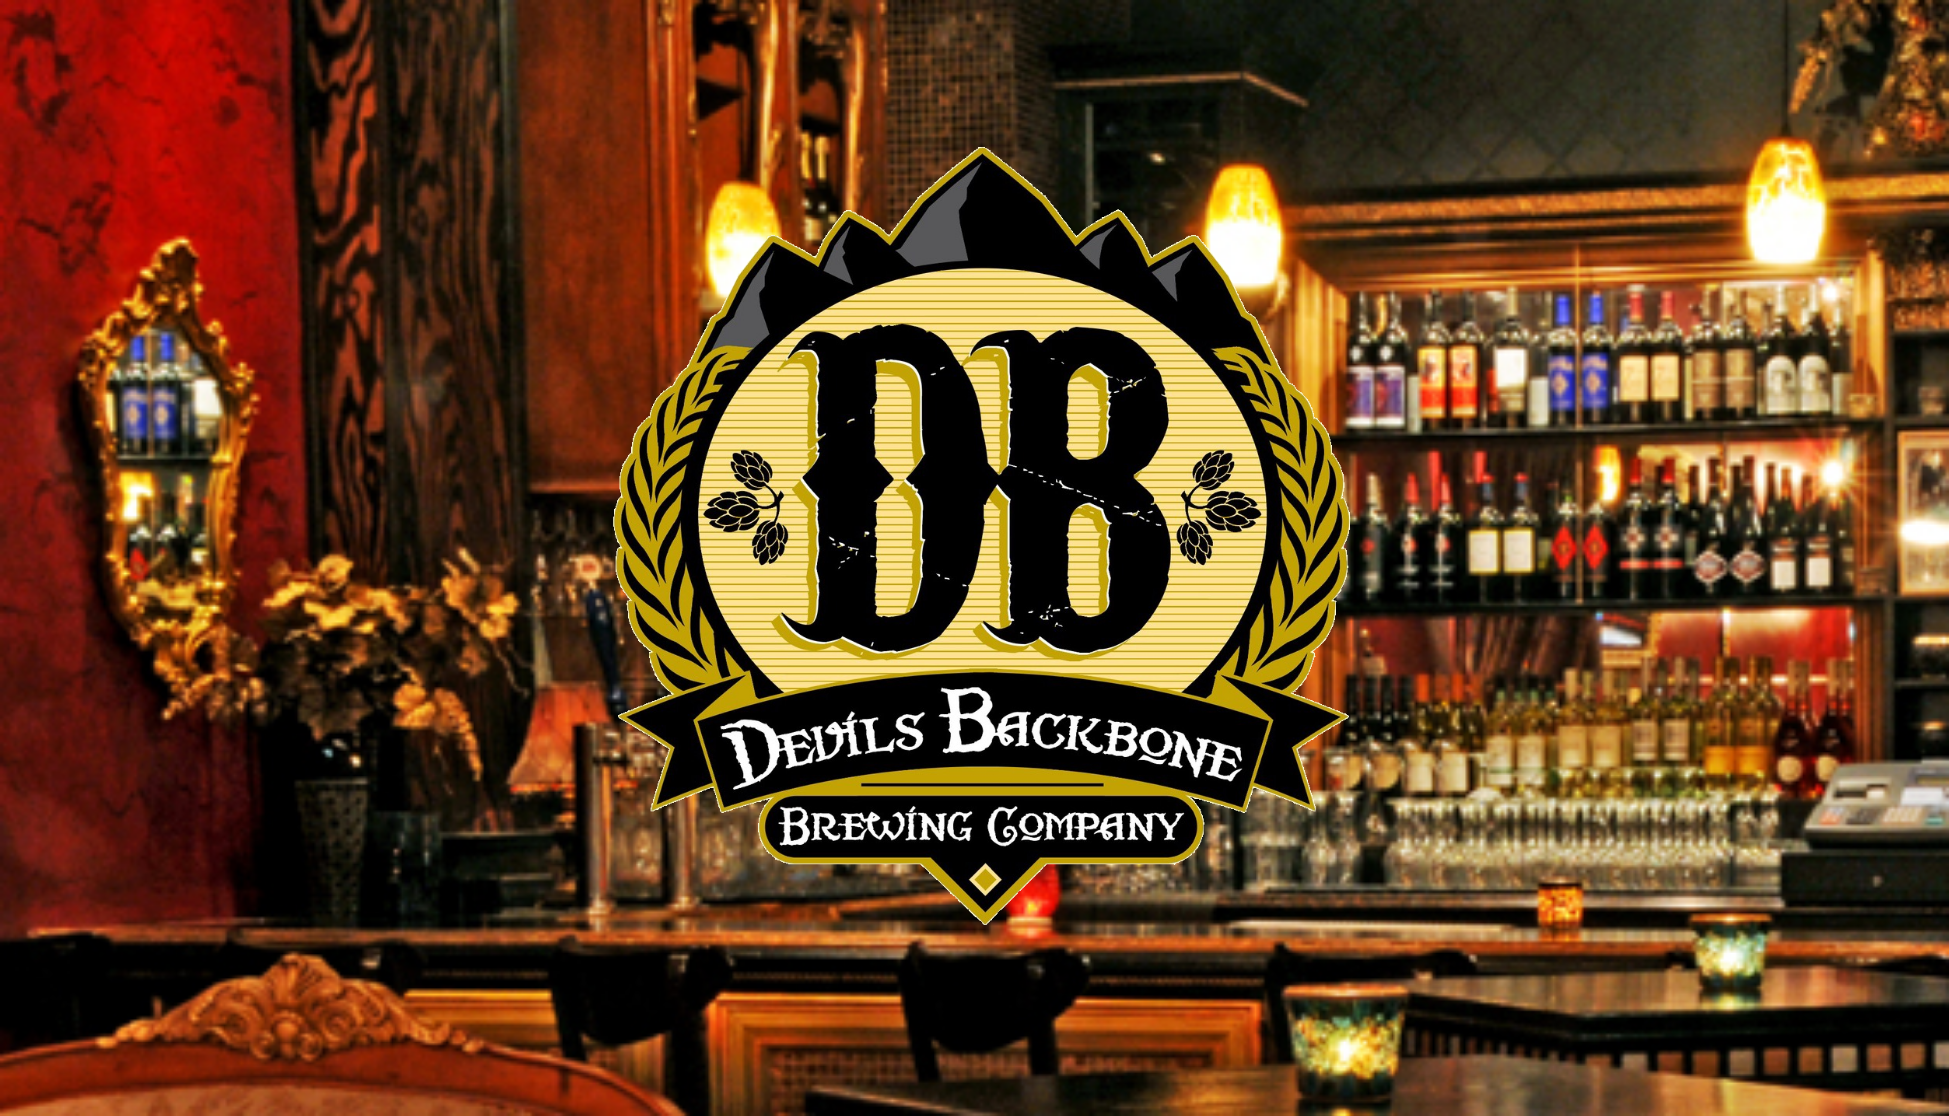 who owns devils backbone beer